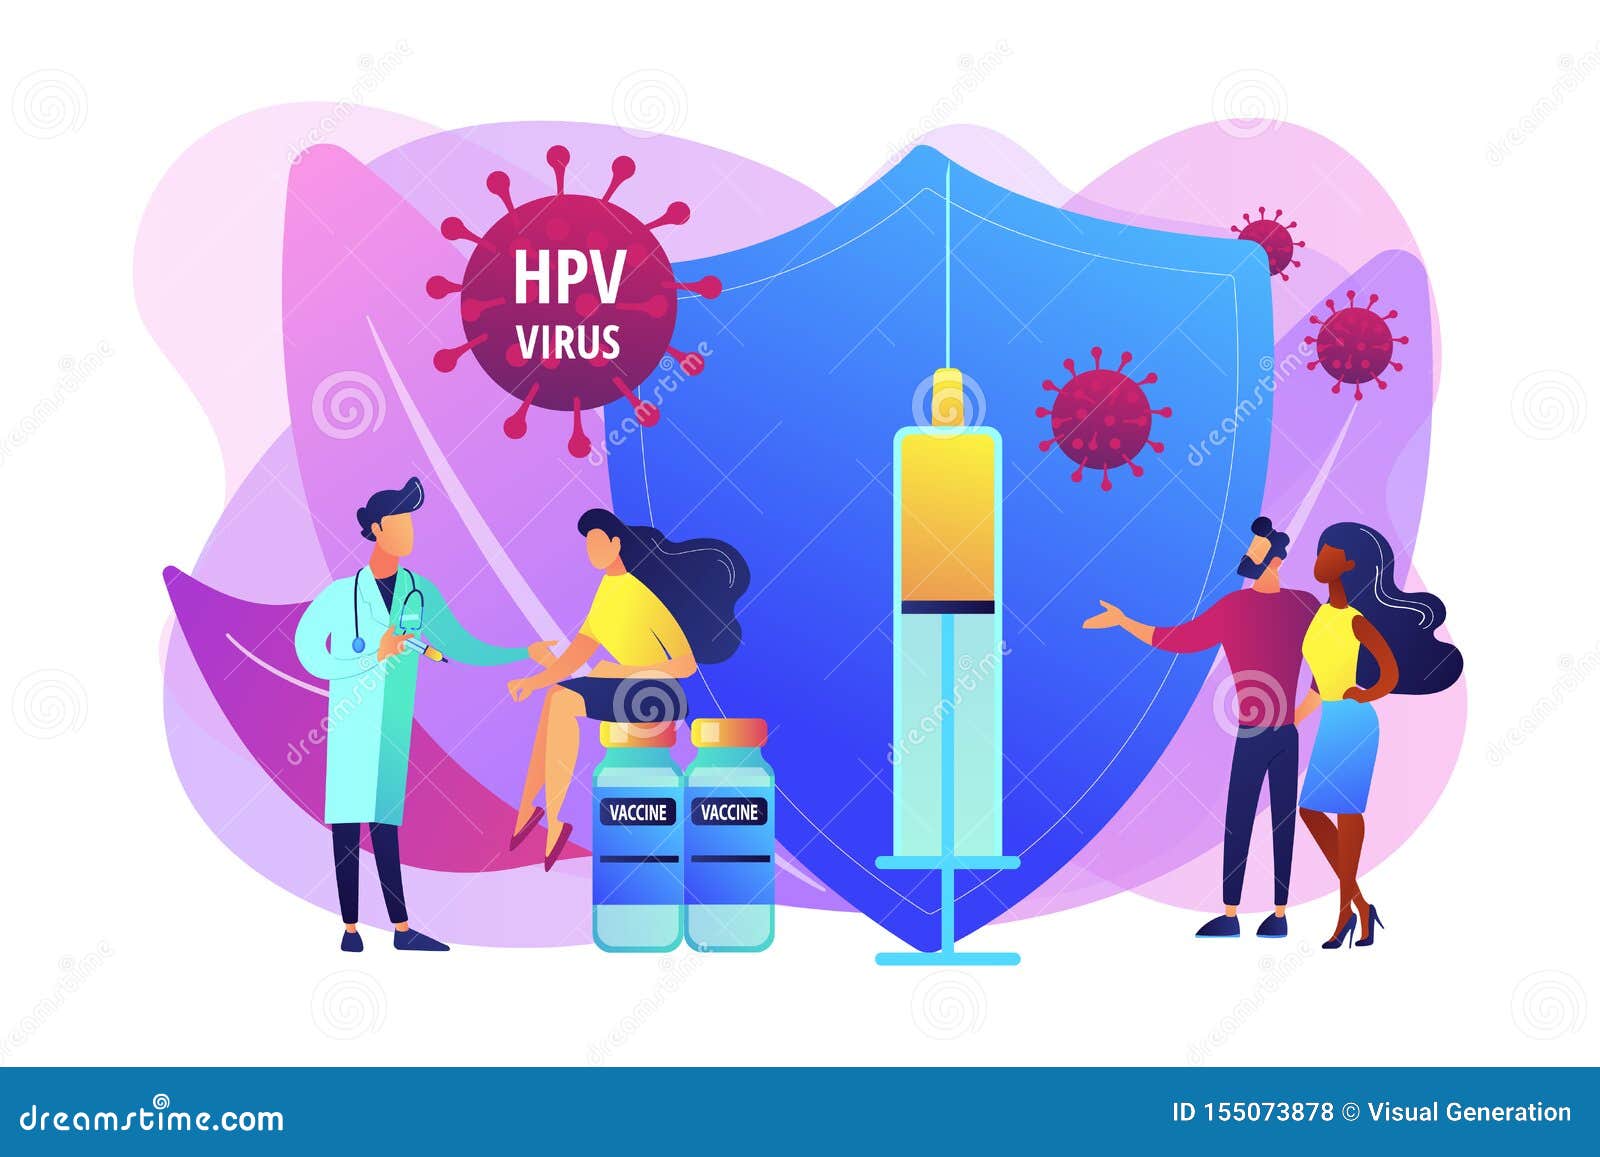 human papillomavirus prevention